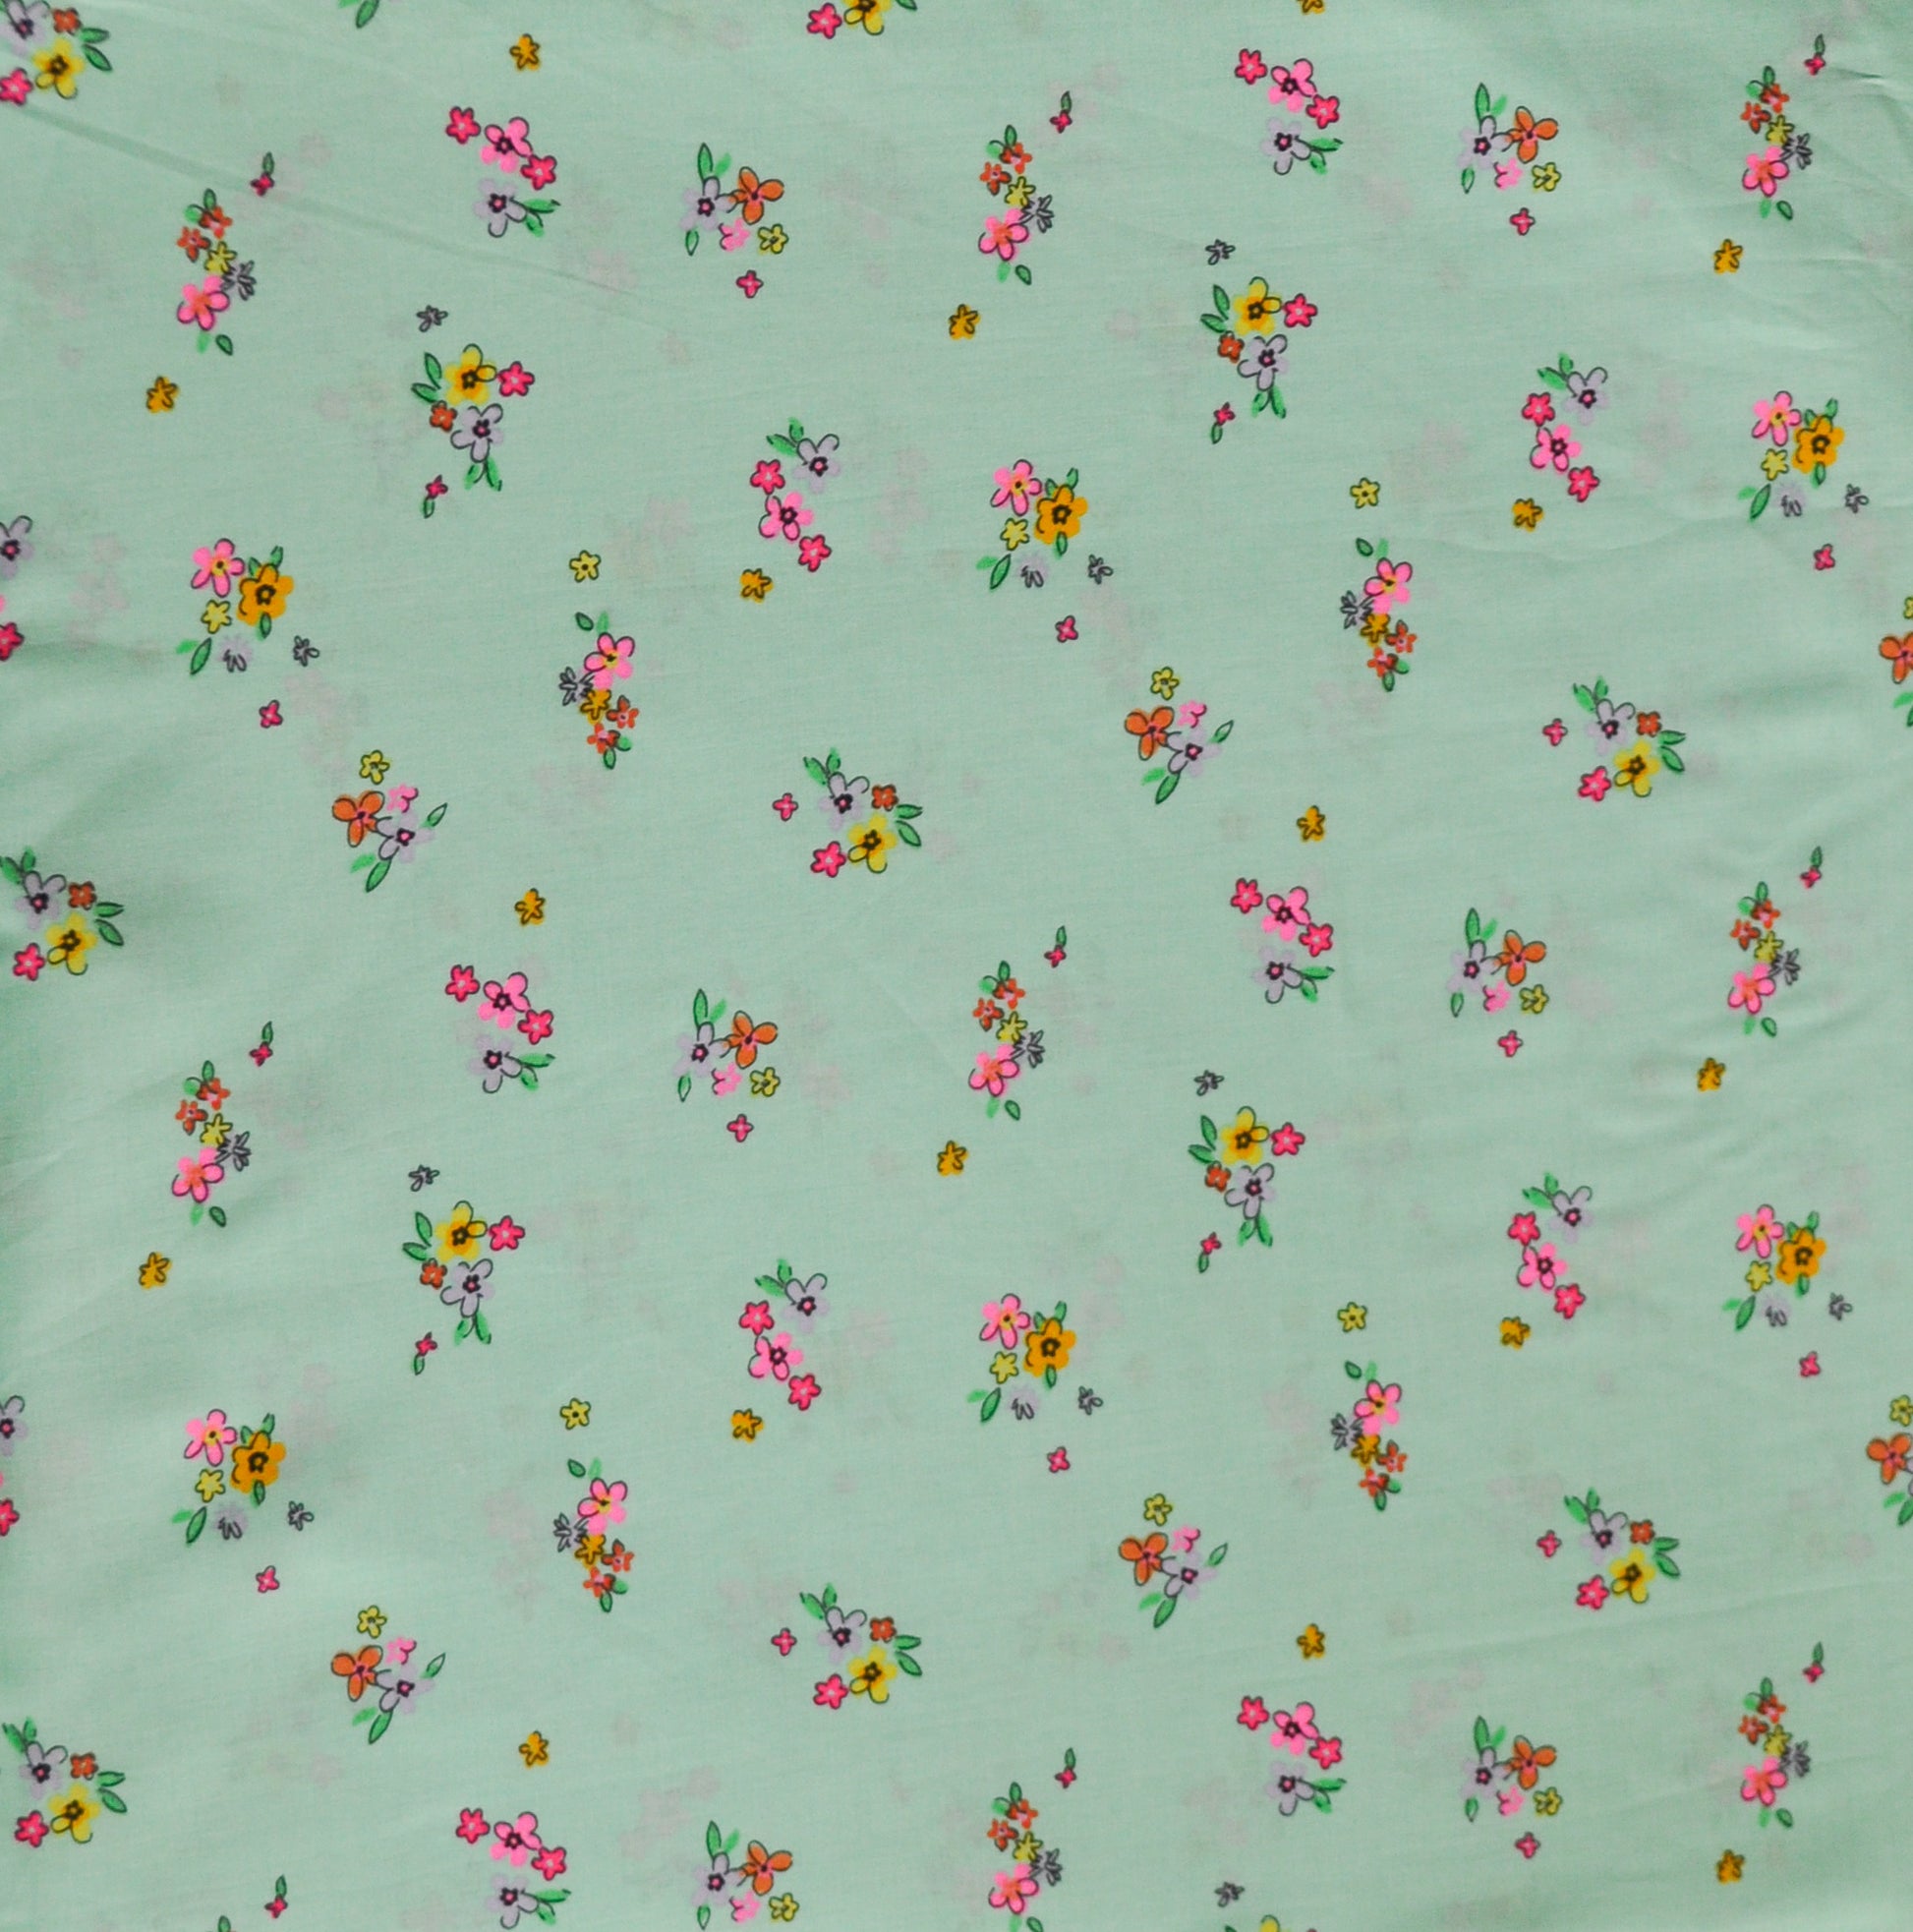 'Green Floral' Organic Pajama Short Set